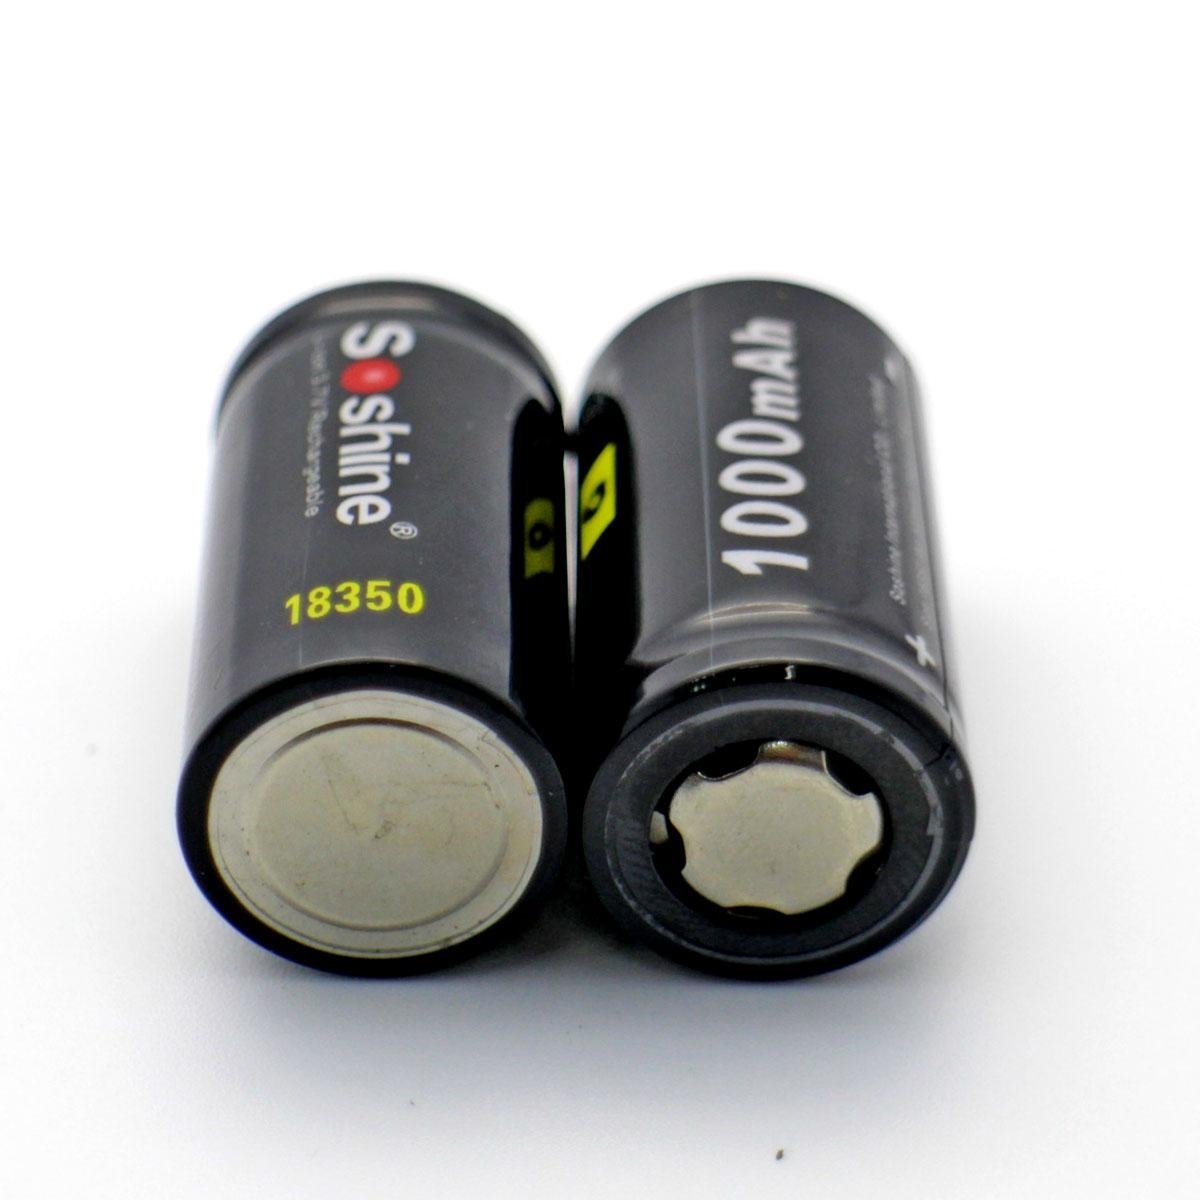 Soshine new 18350 IMR battery 3.7V 1000mAh rechargeable 18350 battery for ecigs 3